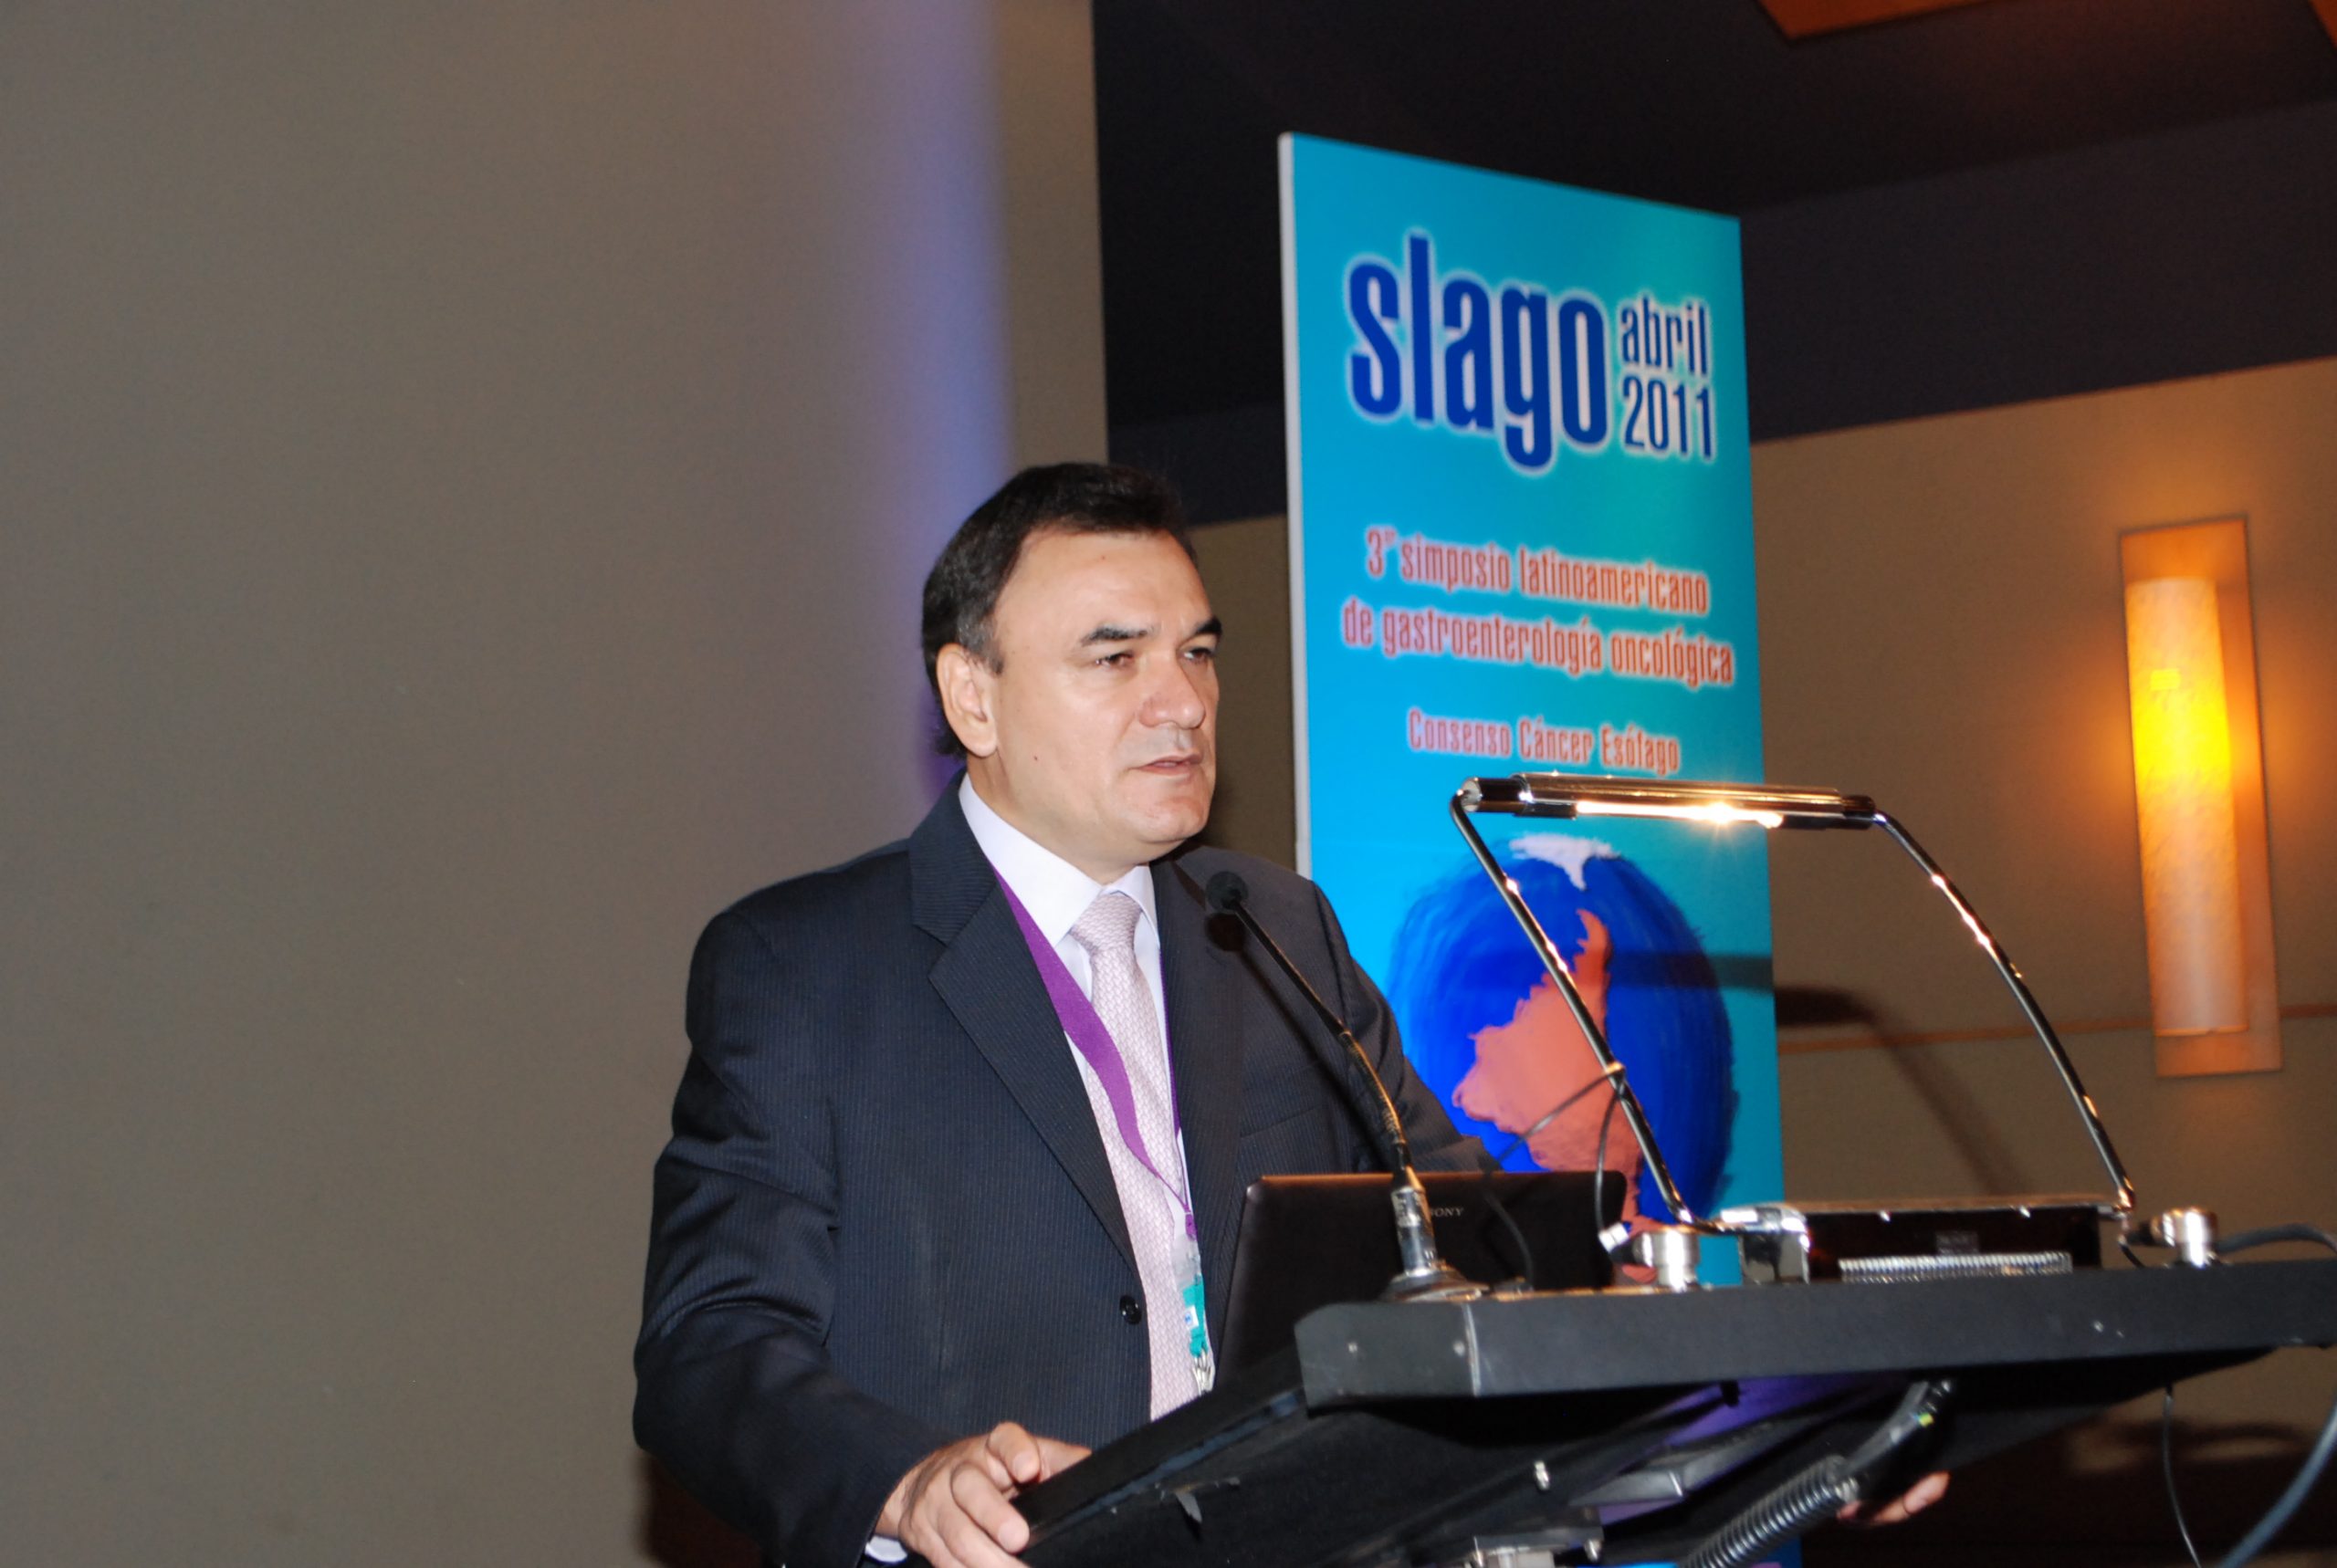 Dr. Jorge Gallardo Inaugura SLAGO 2011 scaled